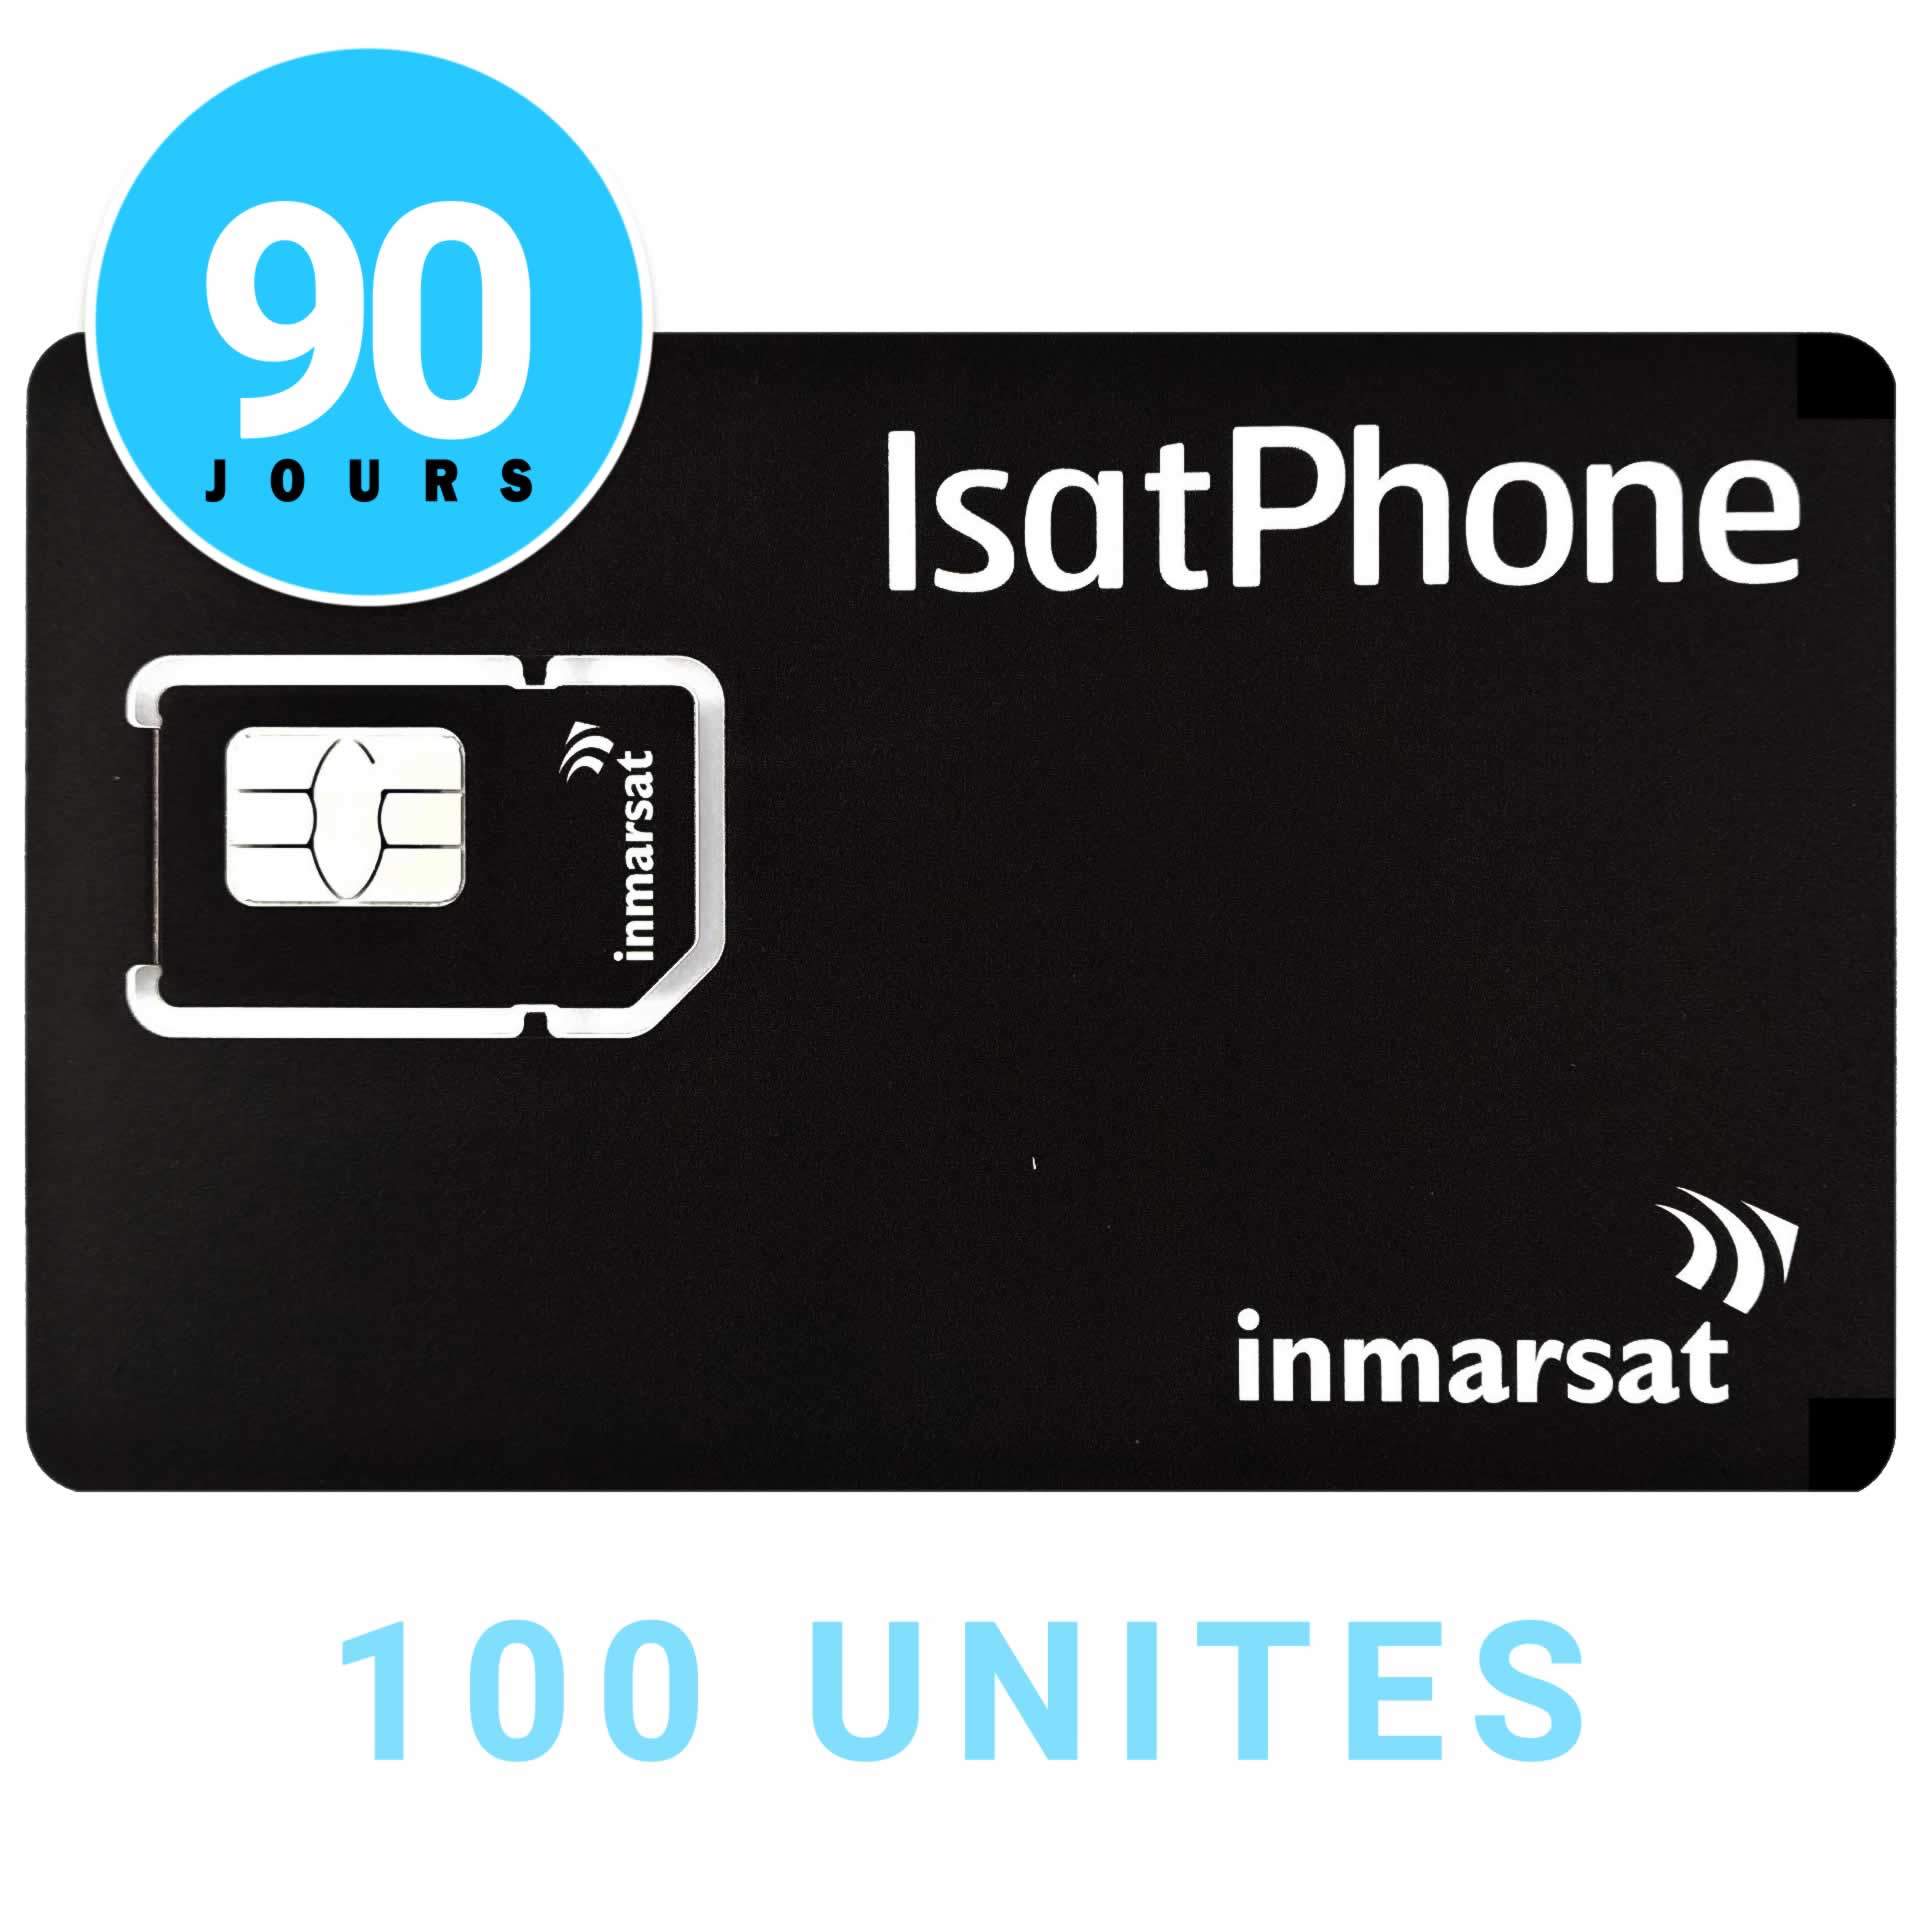 INMARSAT ISATPHONE Prepaid Reloadable Card - 100 UNITS - 90 days